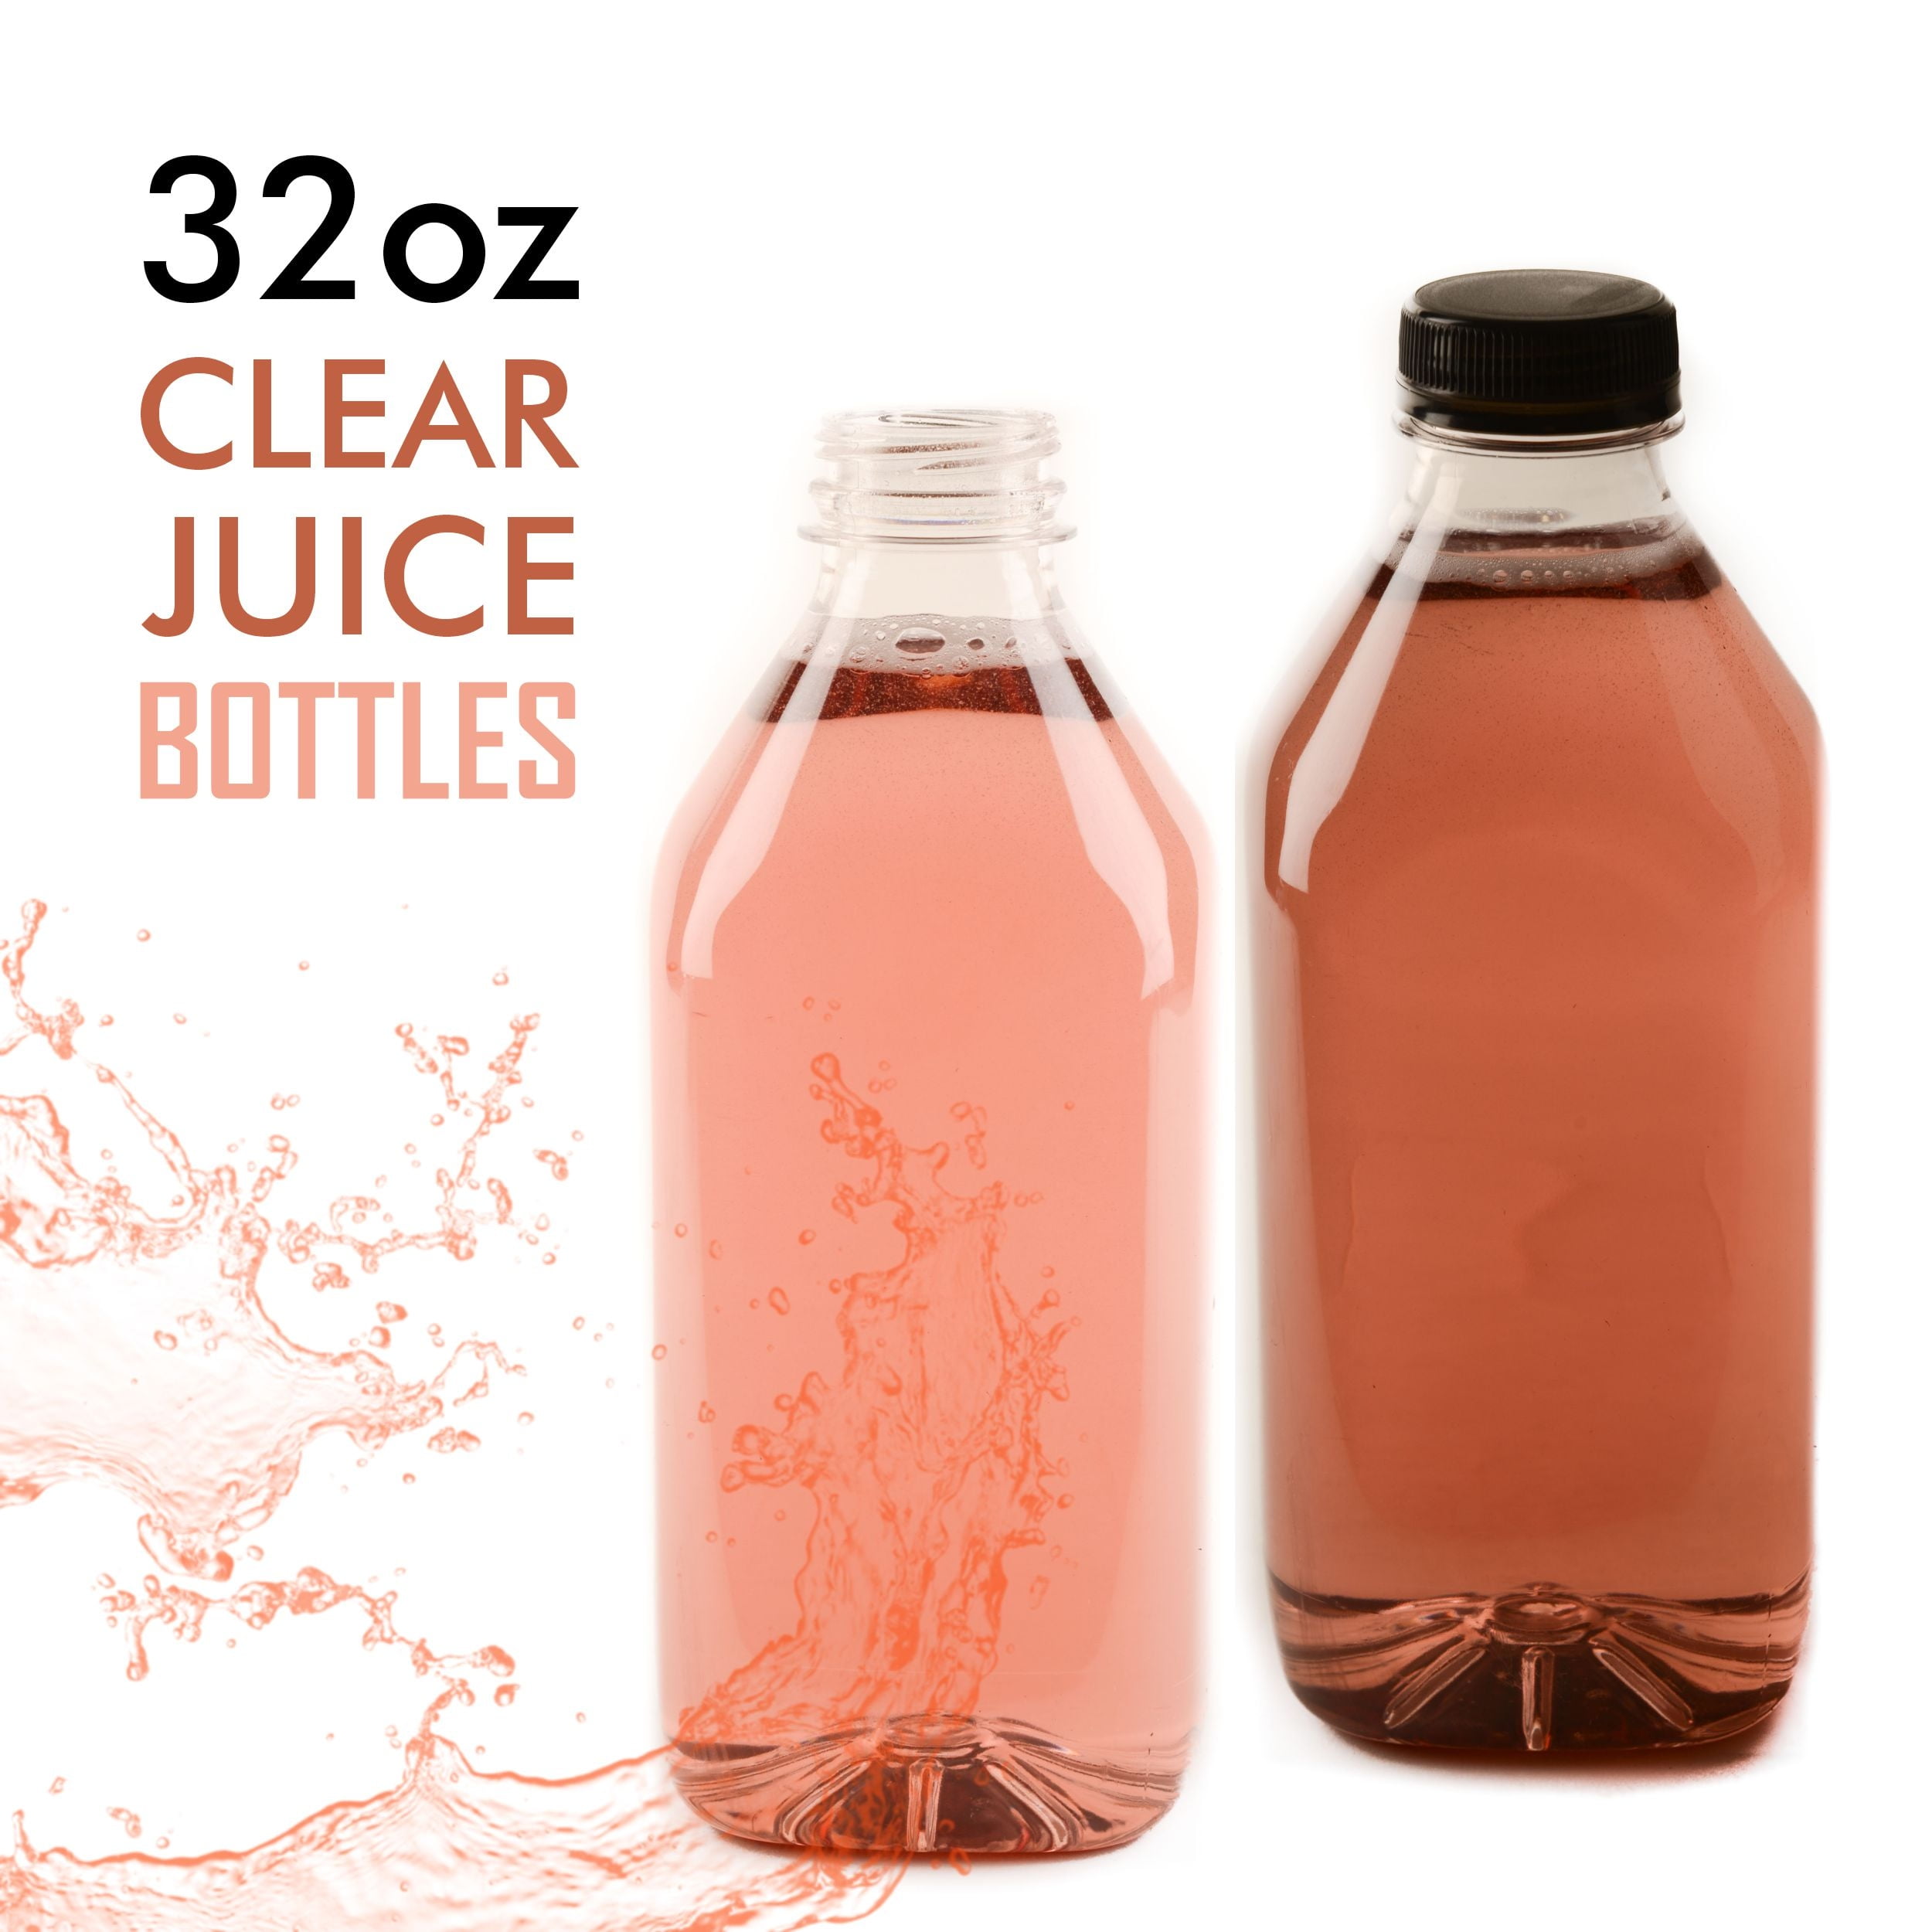 30 pack 32 oz Empty Plastic Juice Bottles with Tamper Evident Caps 